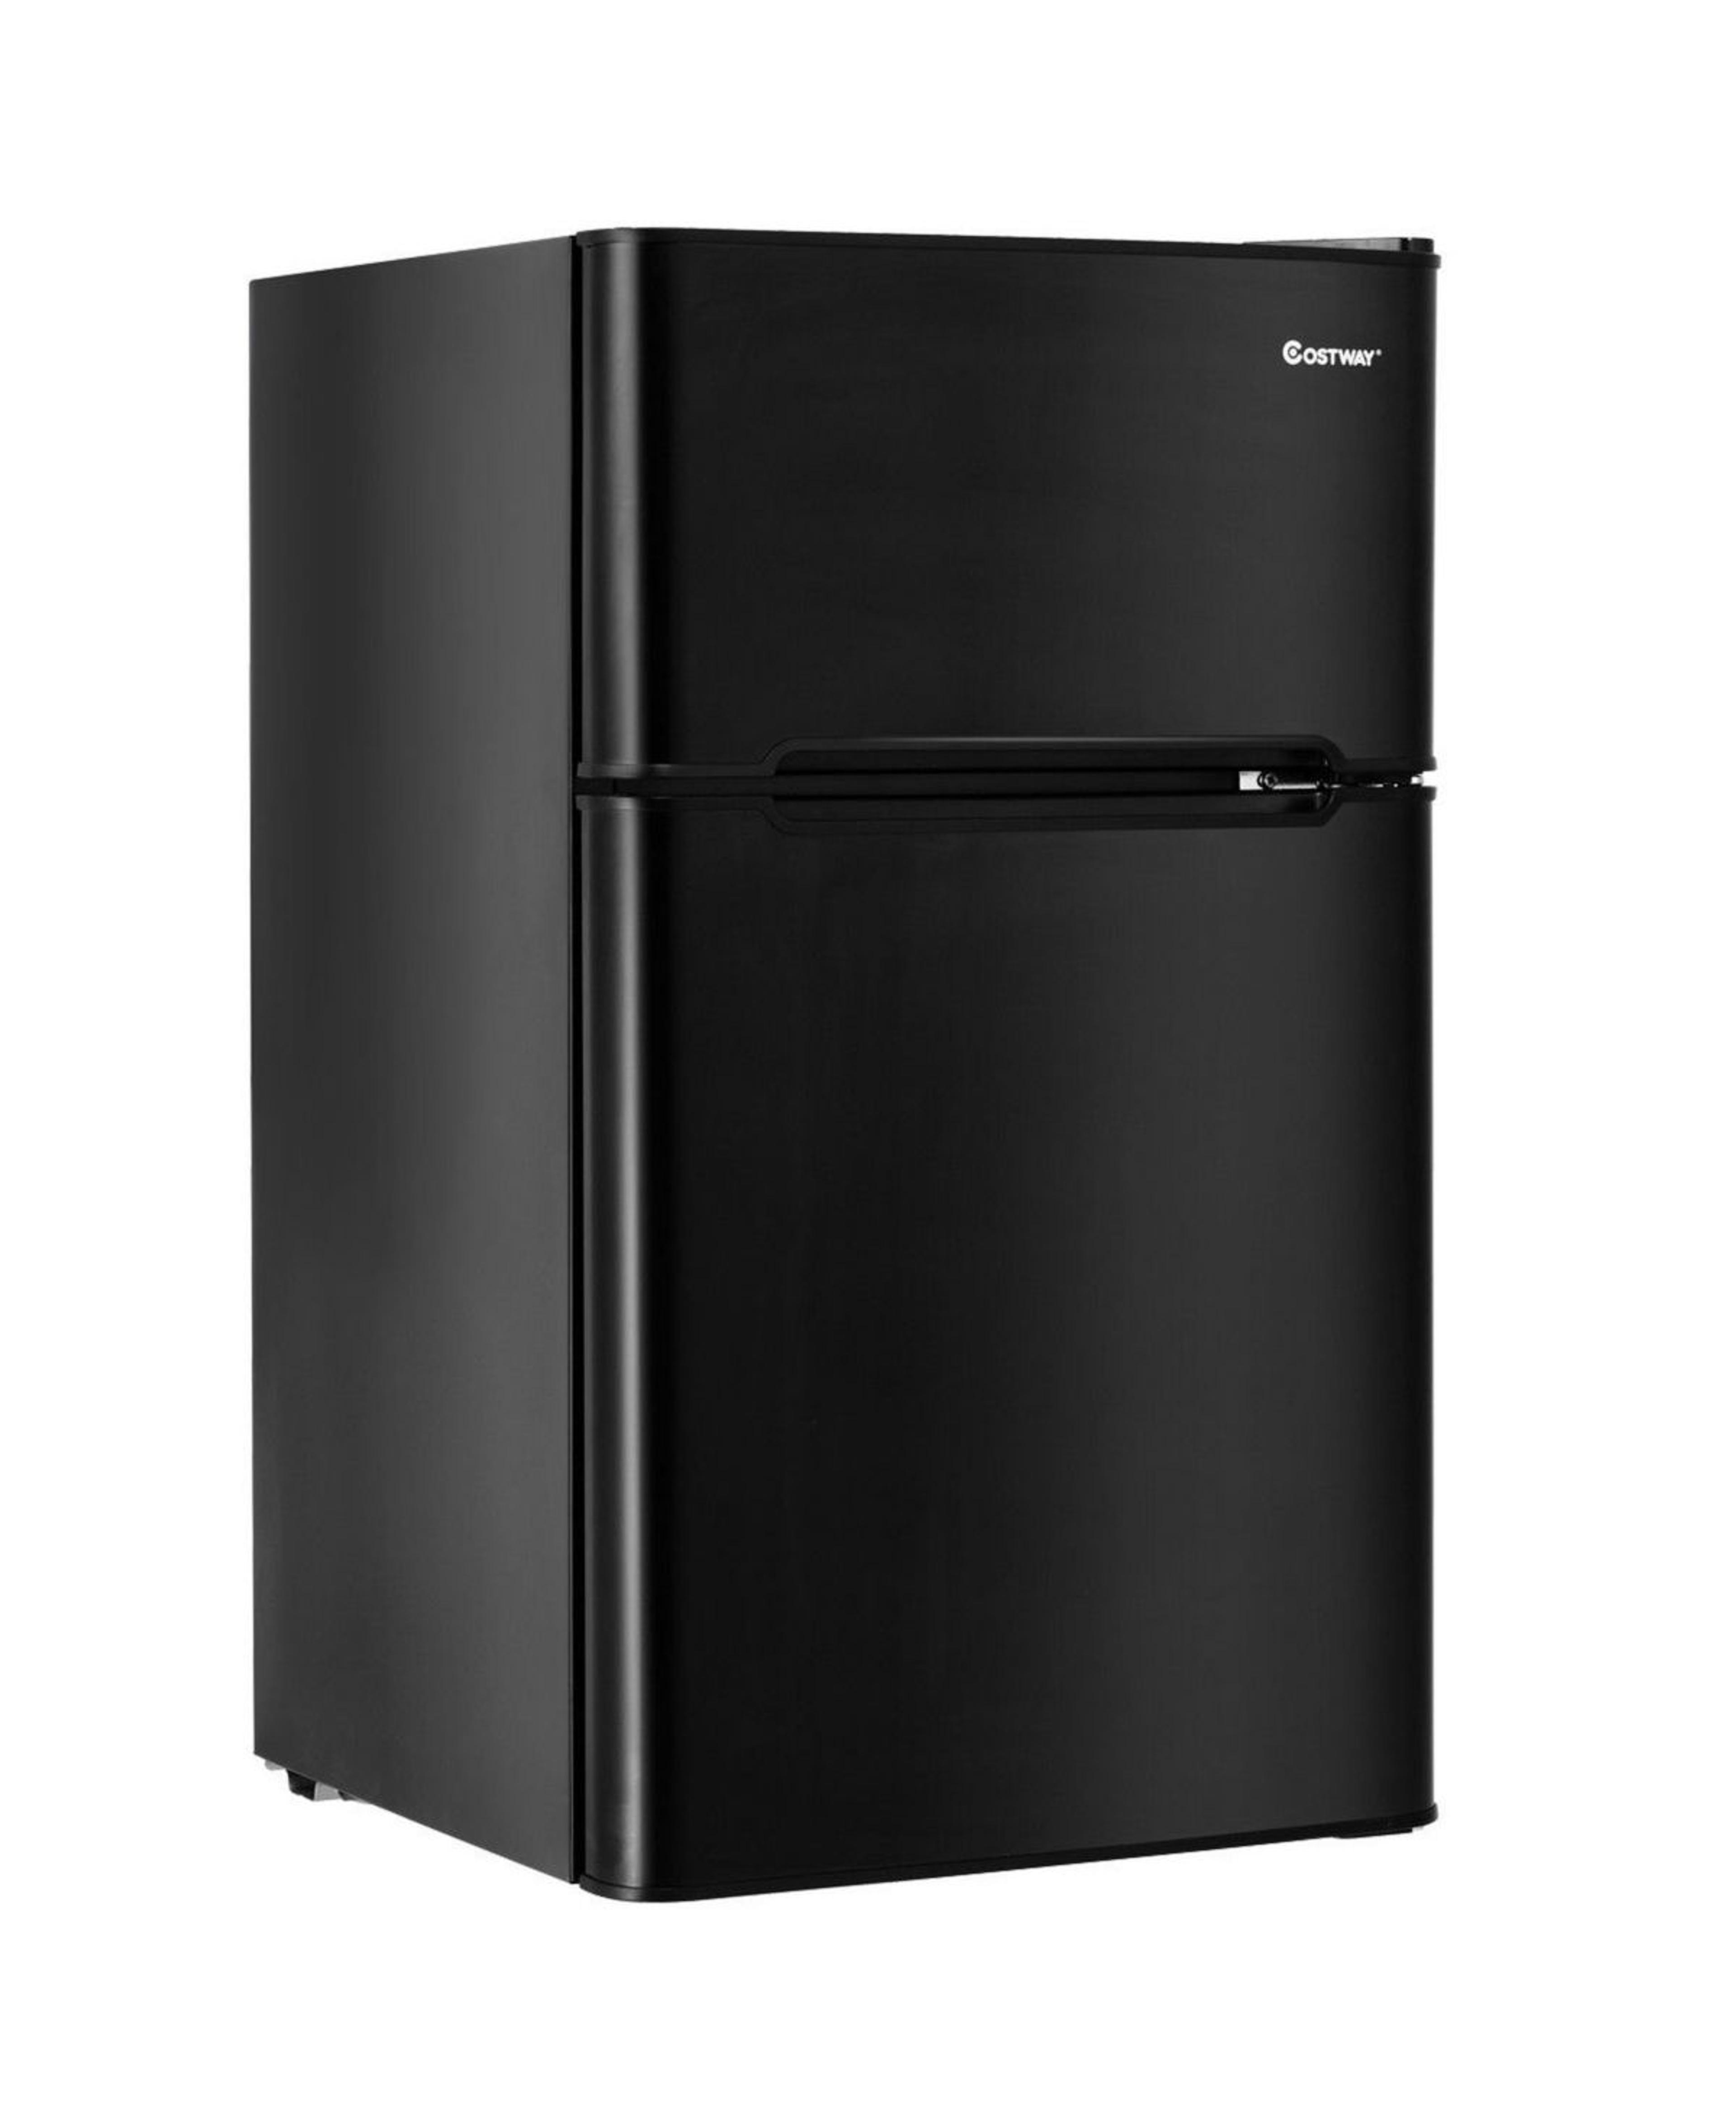 Refrigerator Small Freezer Cooler Fridge Compact 3.2 cu ft. Unit - Black